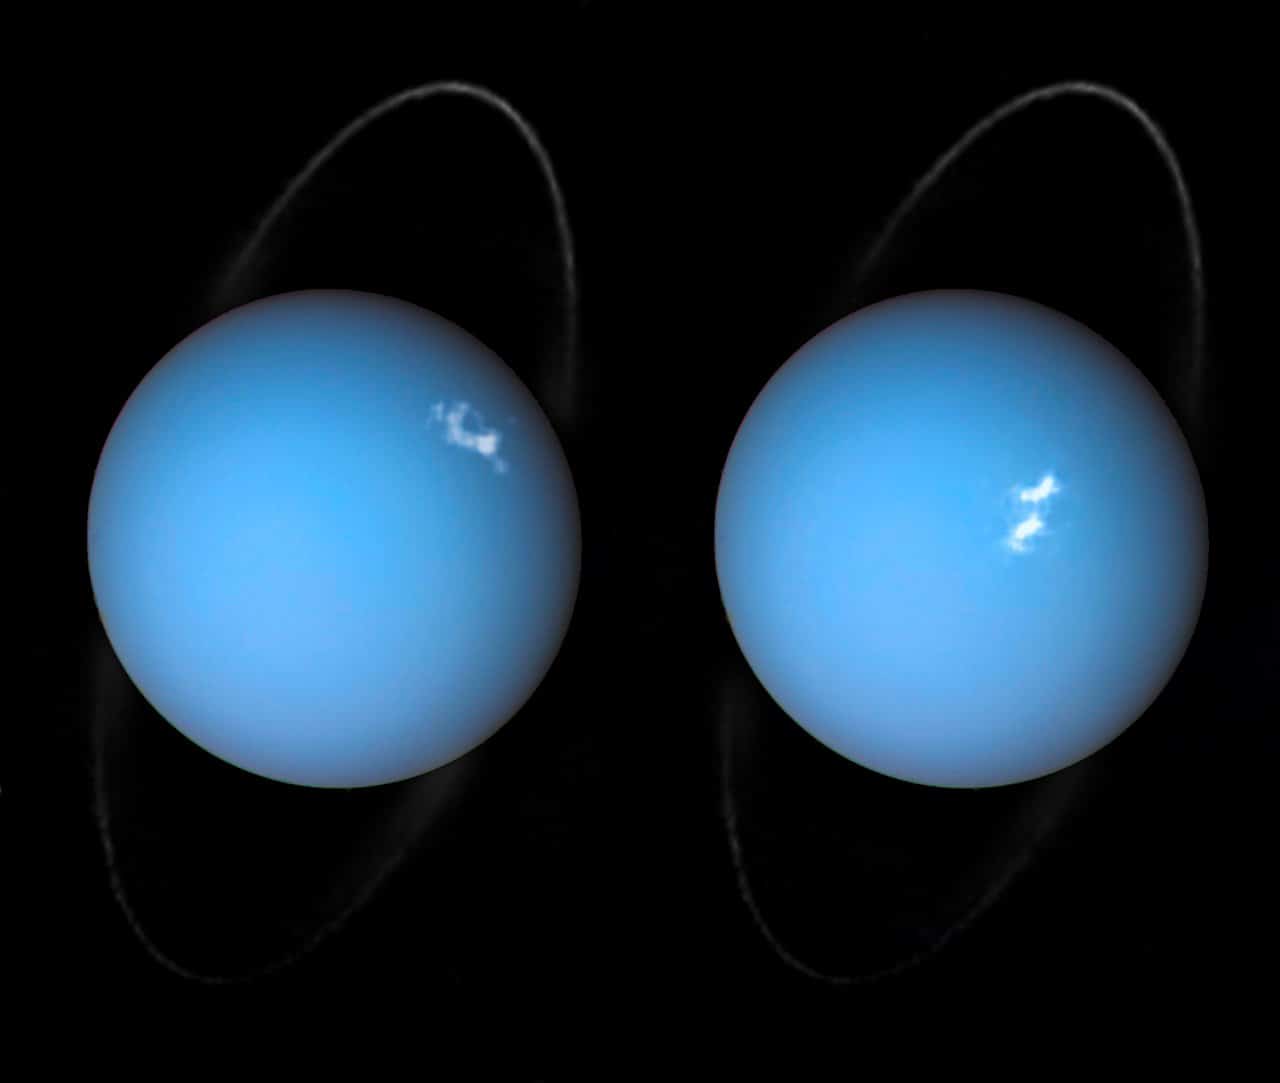 Uranus, poollicht, magnetisch veld